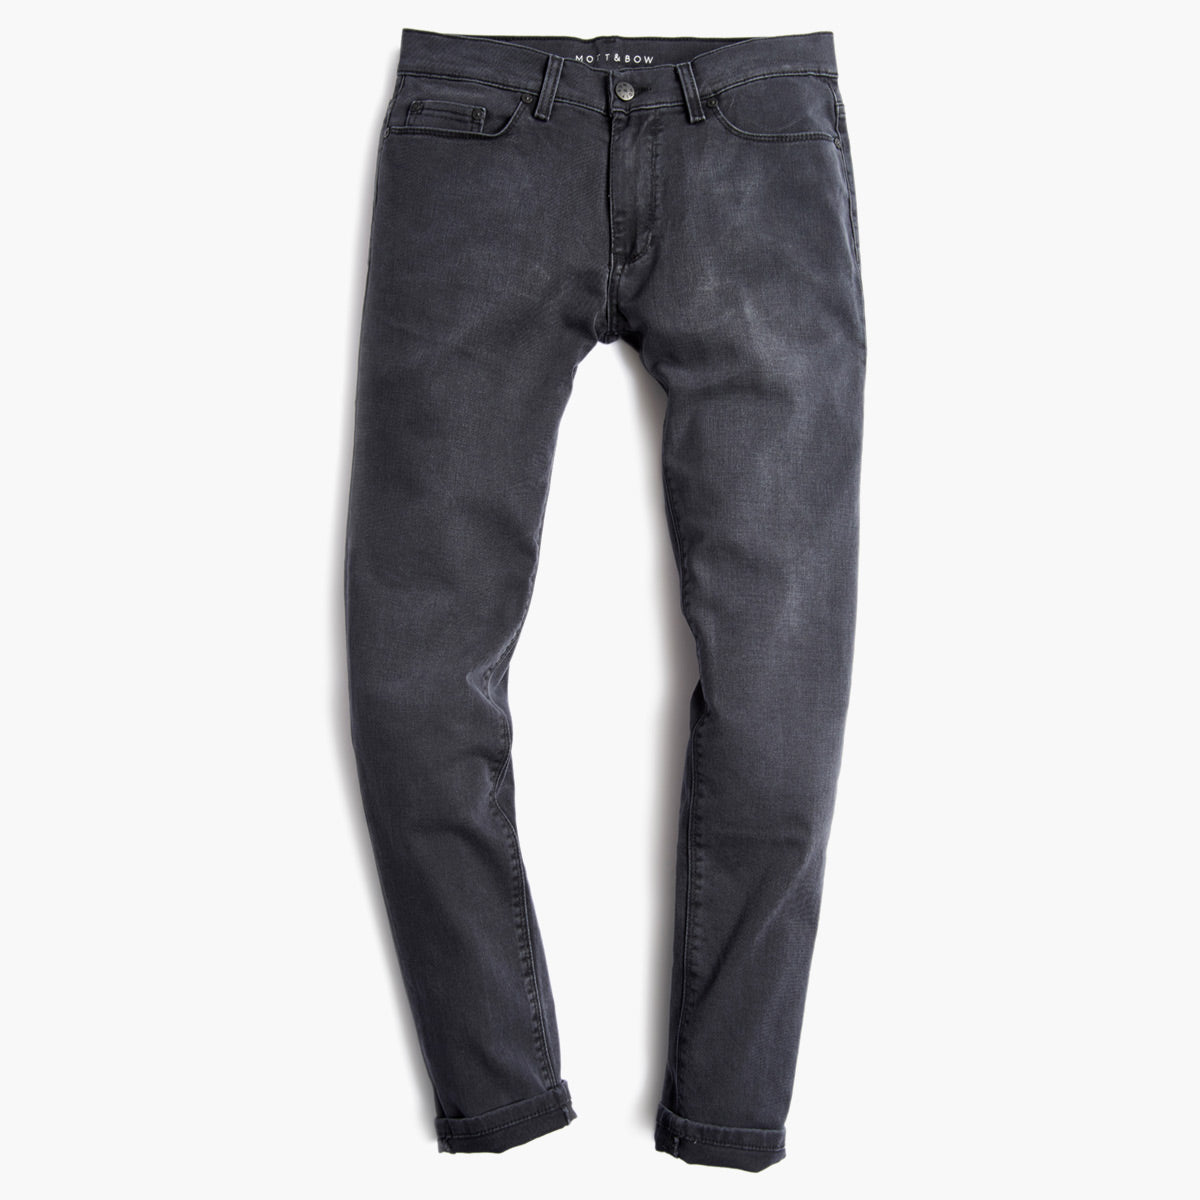 Sf Jeans Men Solid Dark Grey Jeans - Selling Fast at Pantaloons.com